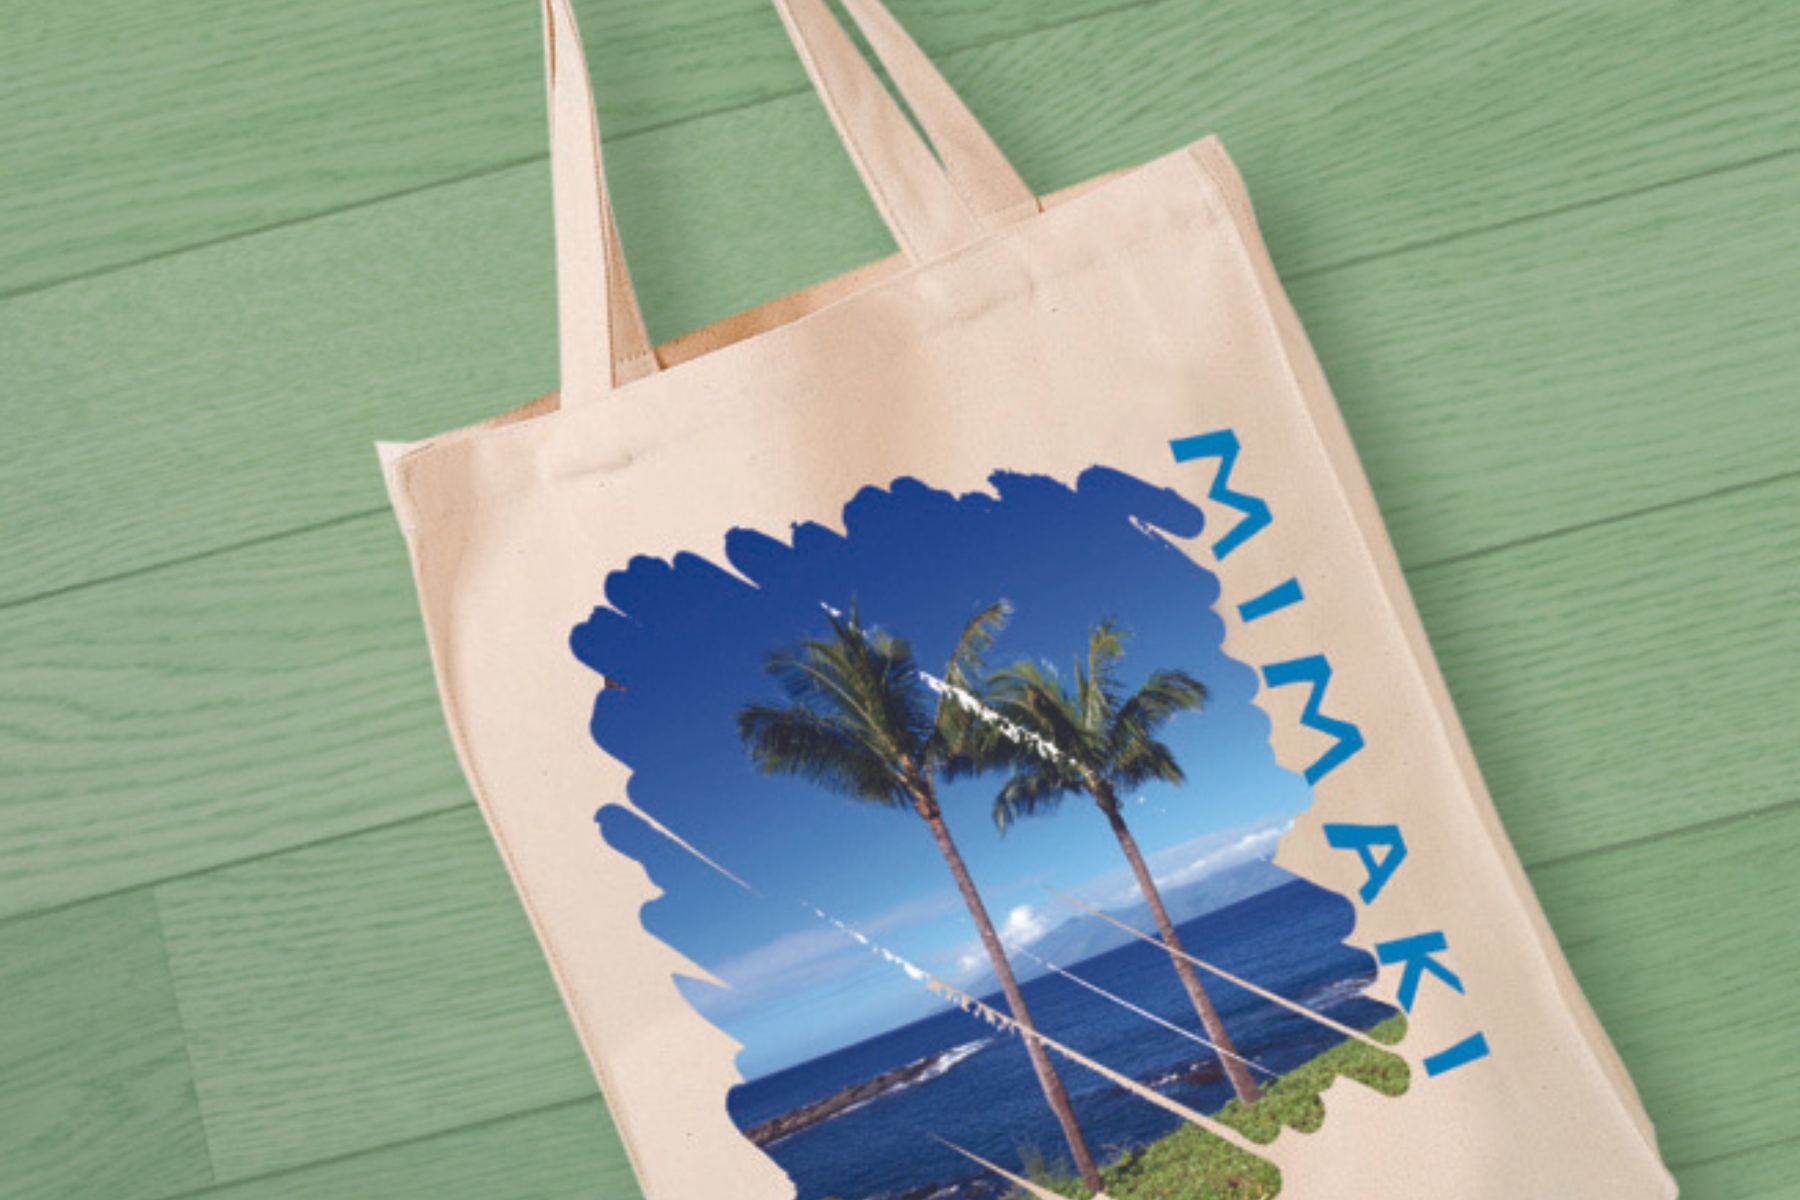 A Mimaki printed tote bag